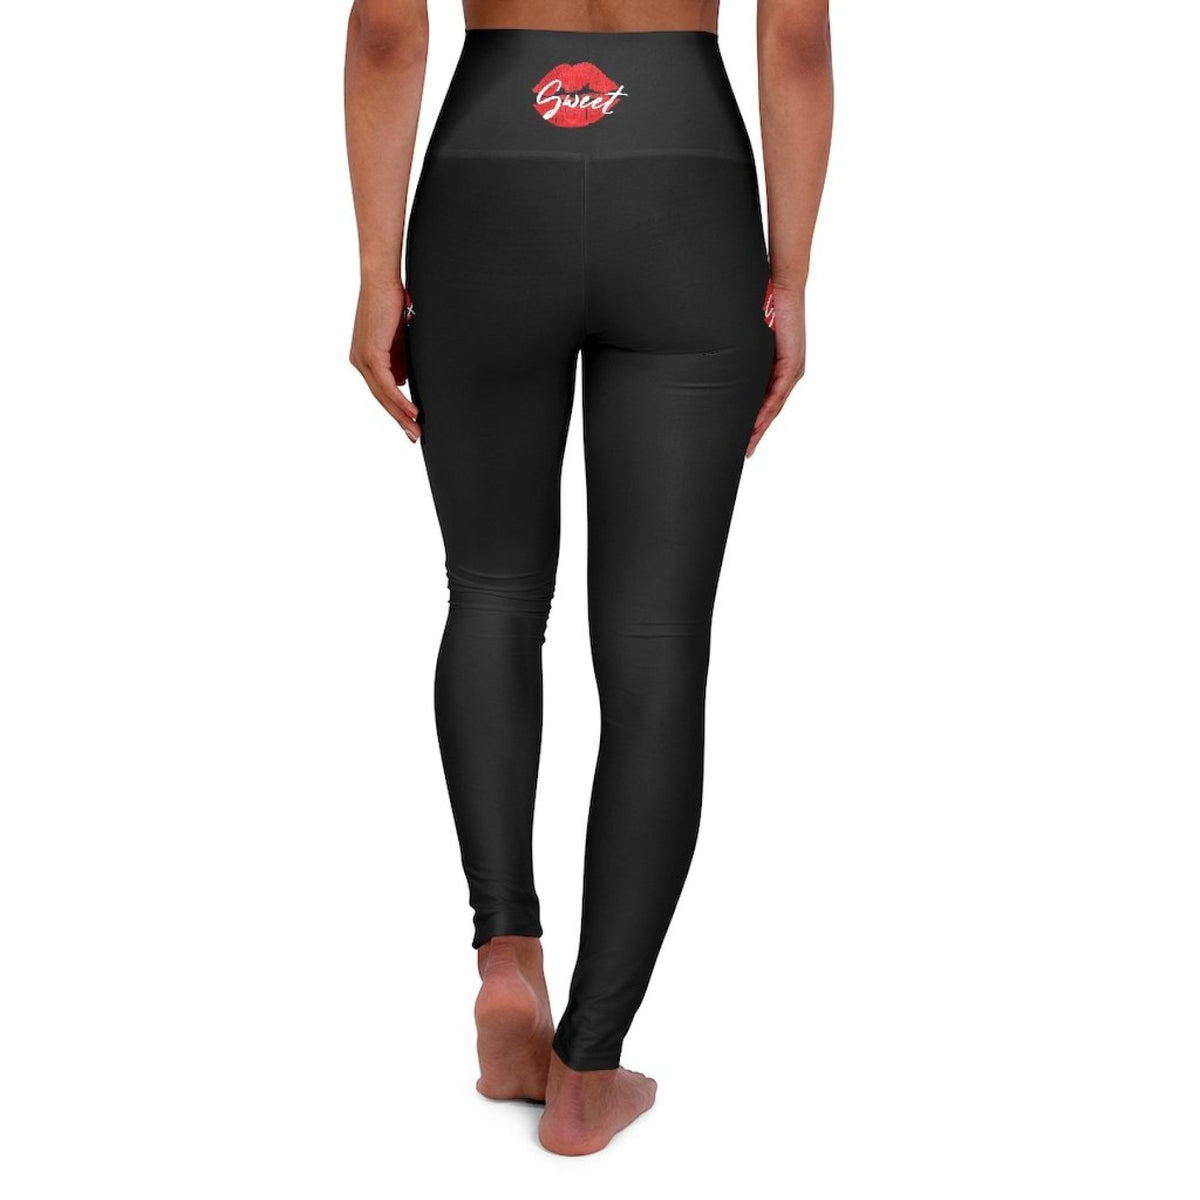 High Waisted Yoga Leggings, Sweet Kiss Red Lipstick Style Pants Angelwarriorfitness.com